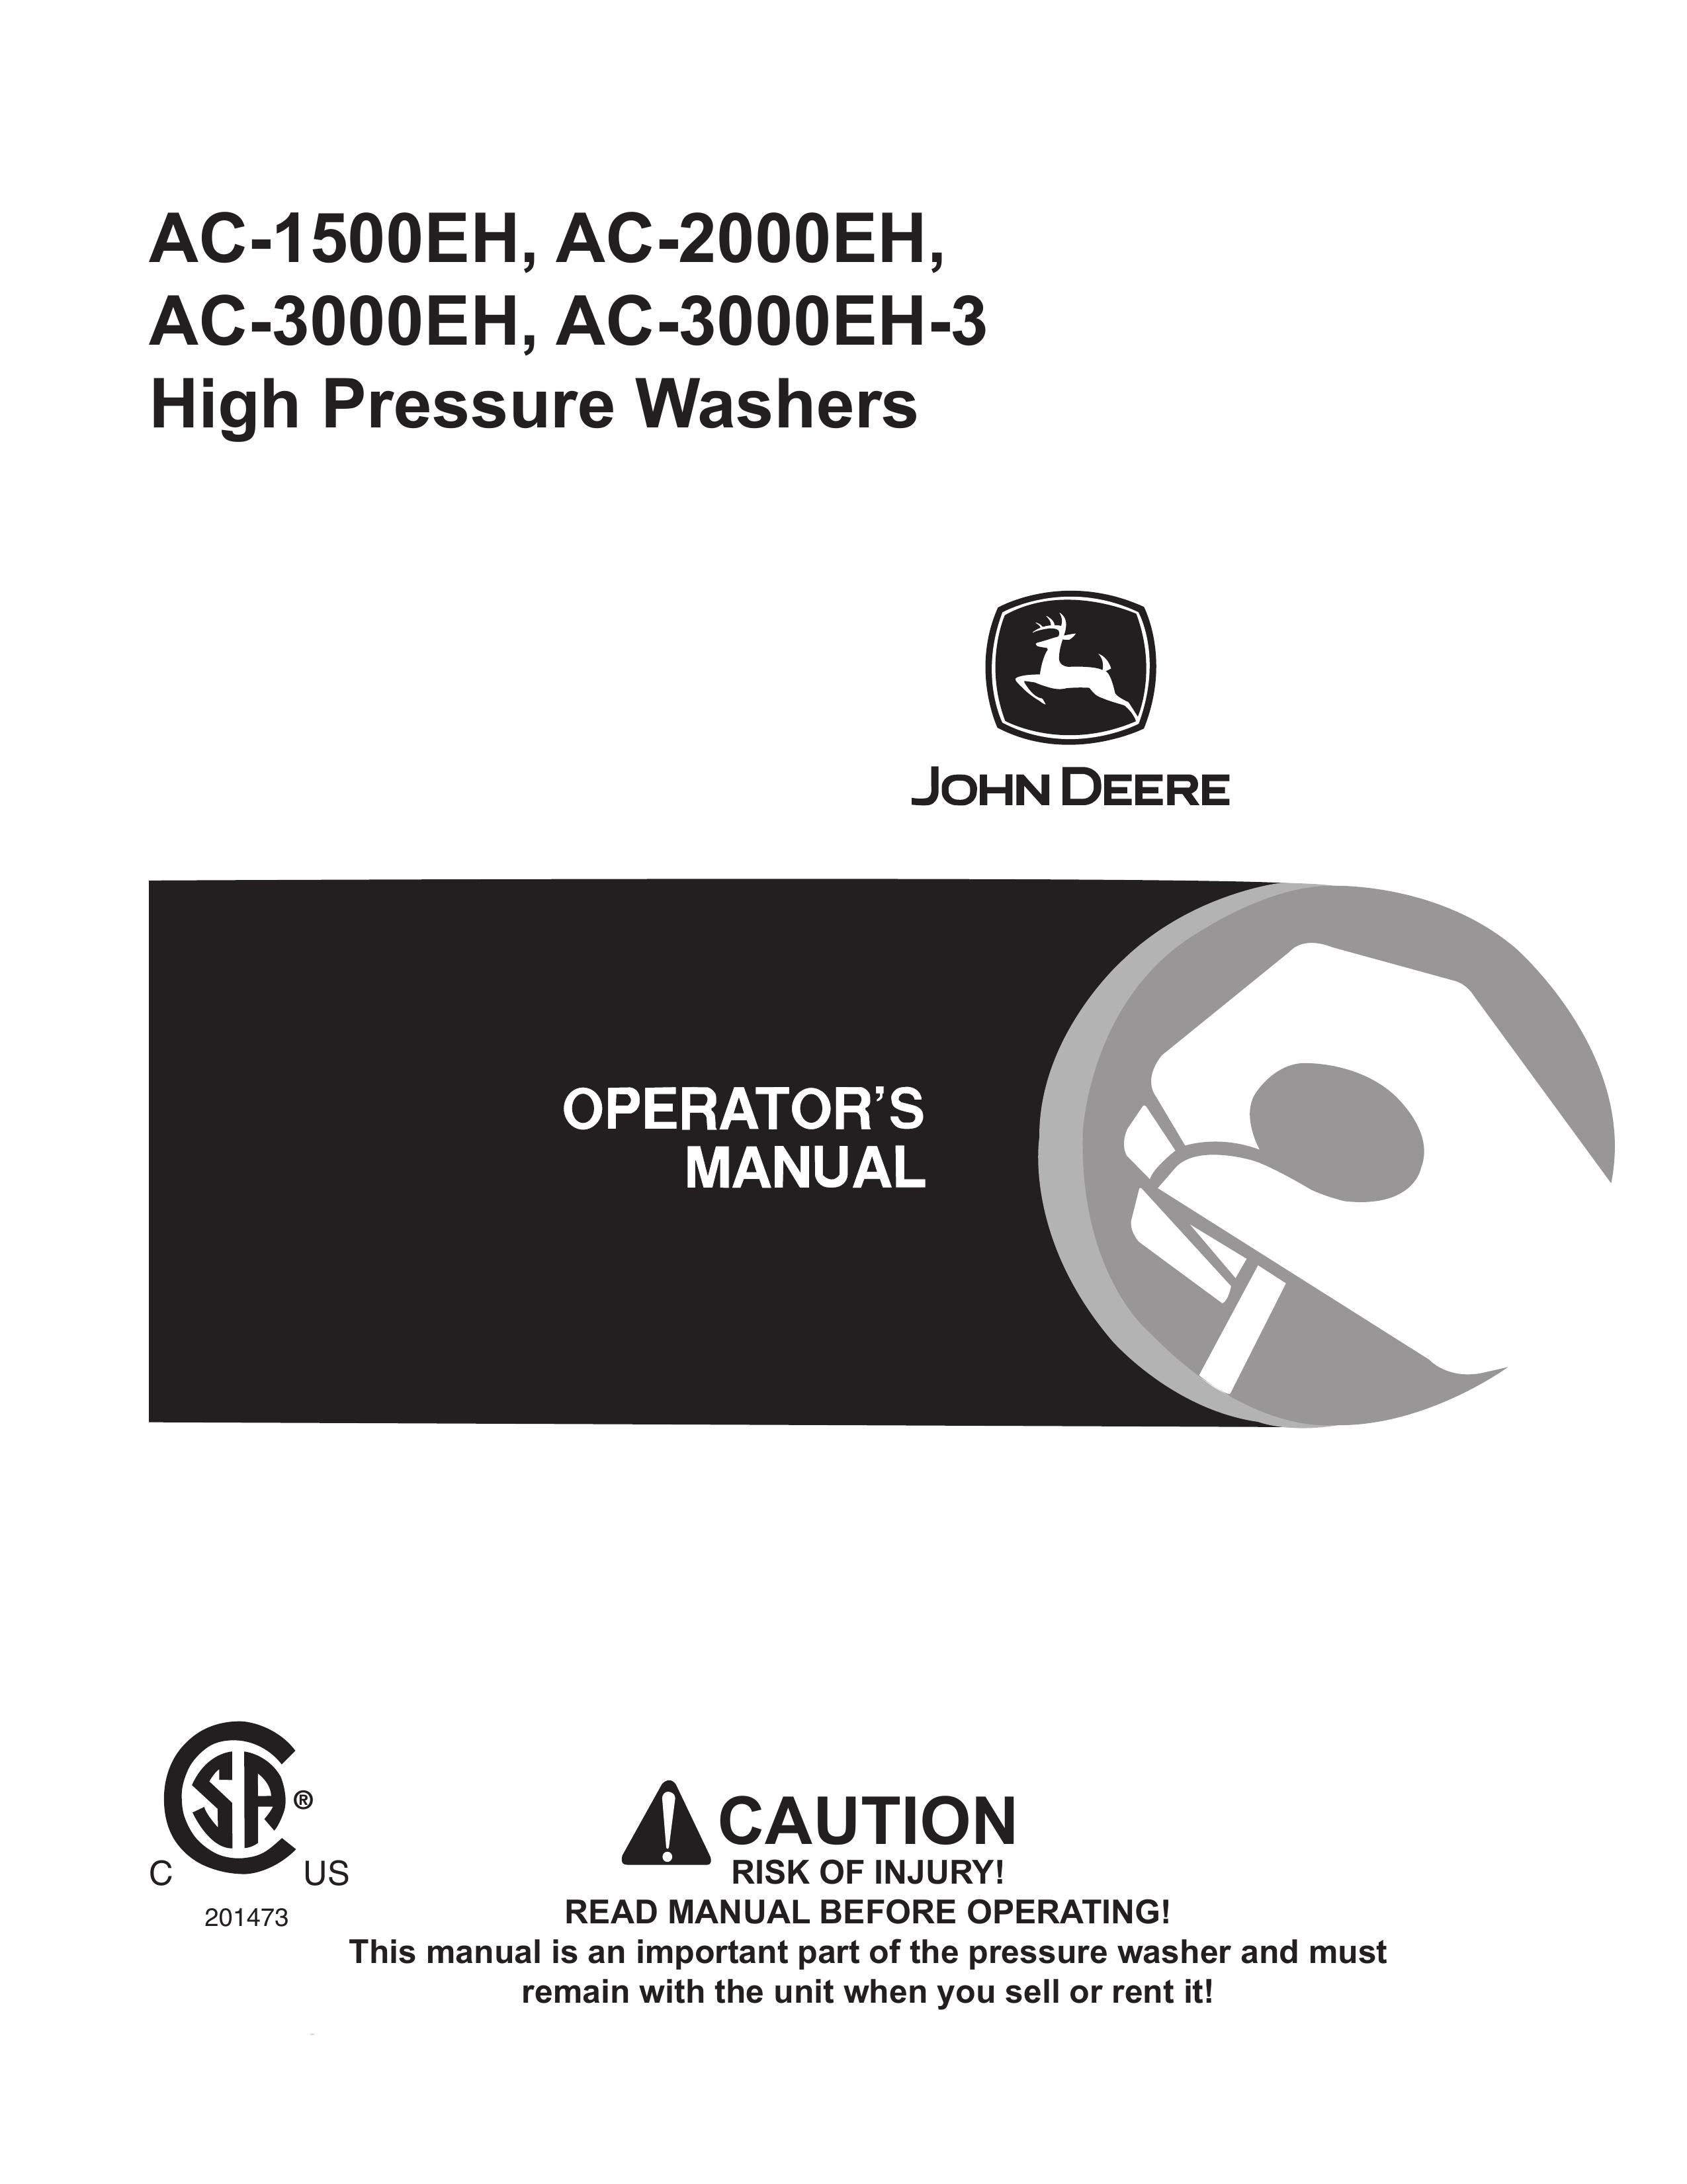 John Deere AC-3000EH-3 Washer User Manual